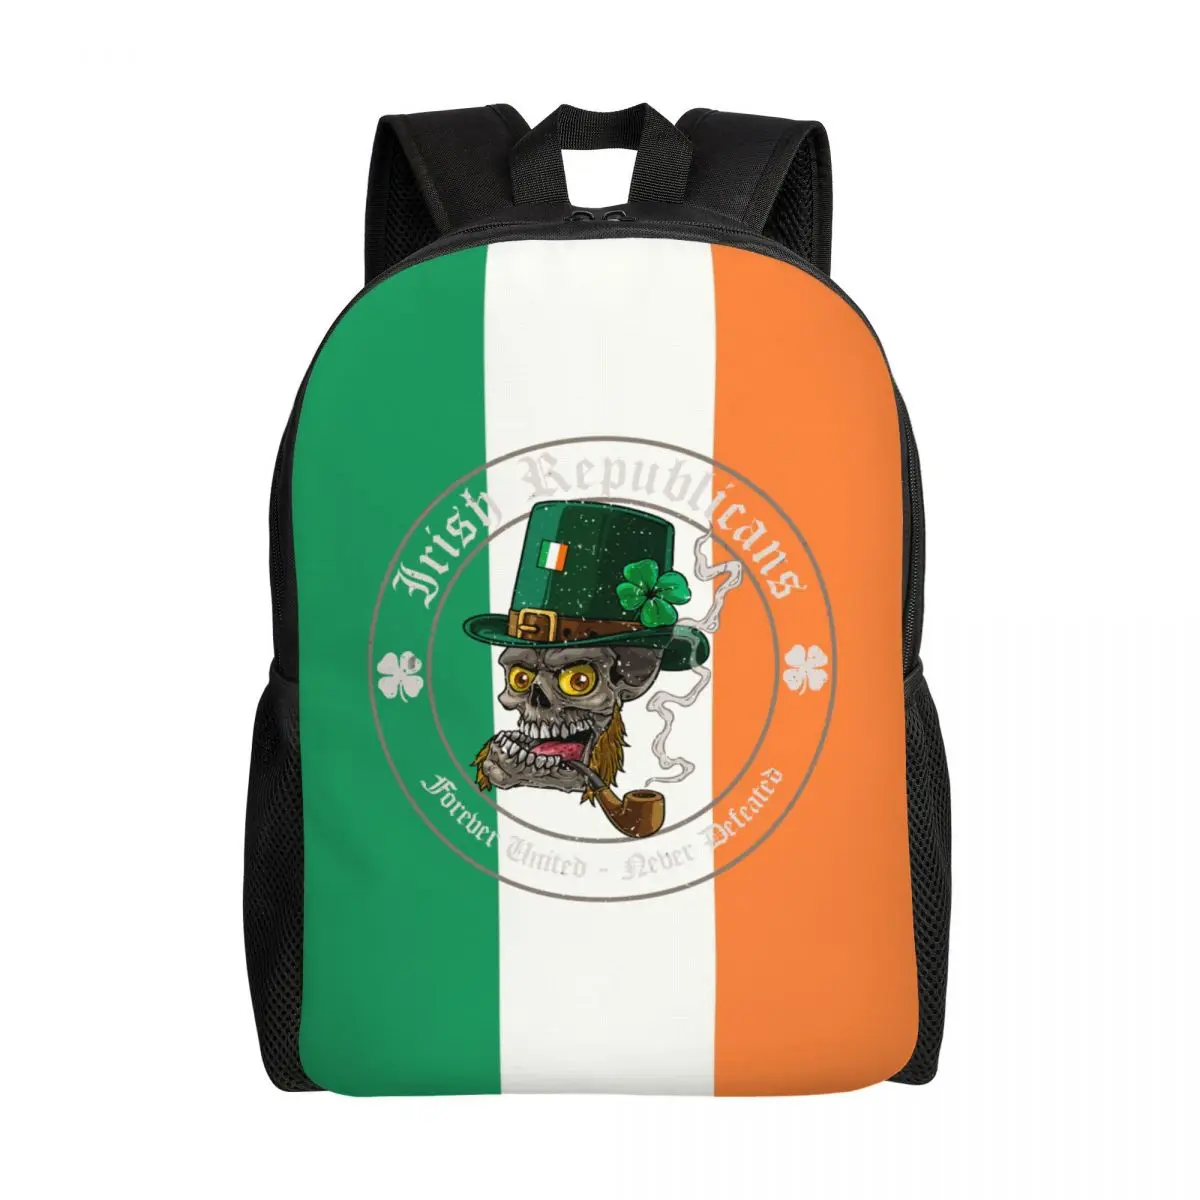 

Irish Republicans Travel Backpack Men Women School Laptop Bookbag Ireland Flag College Student Daypack Bags